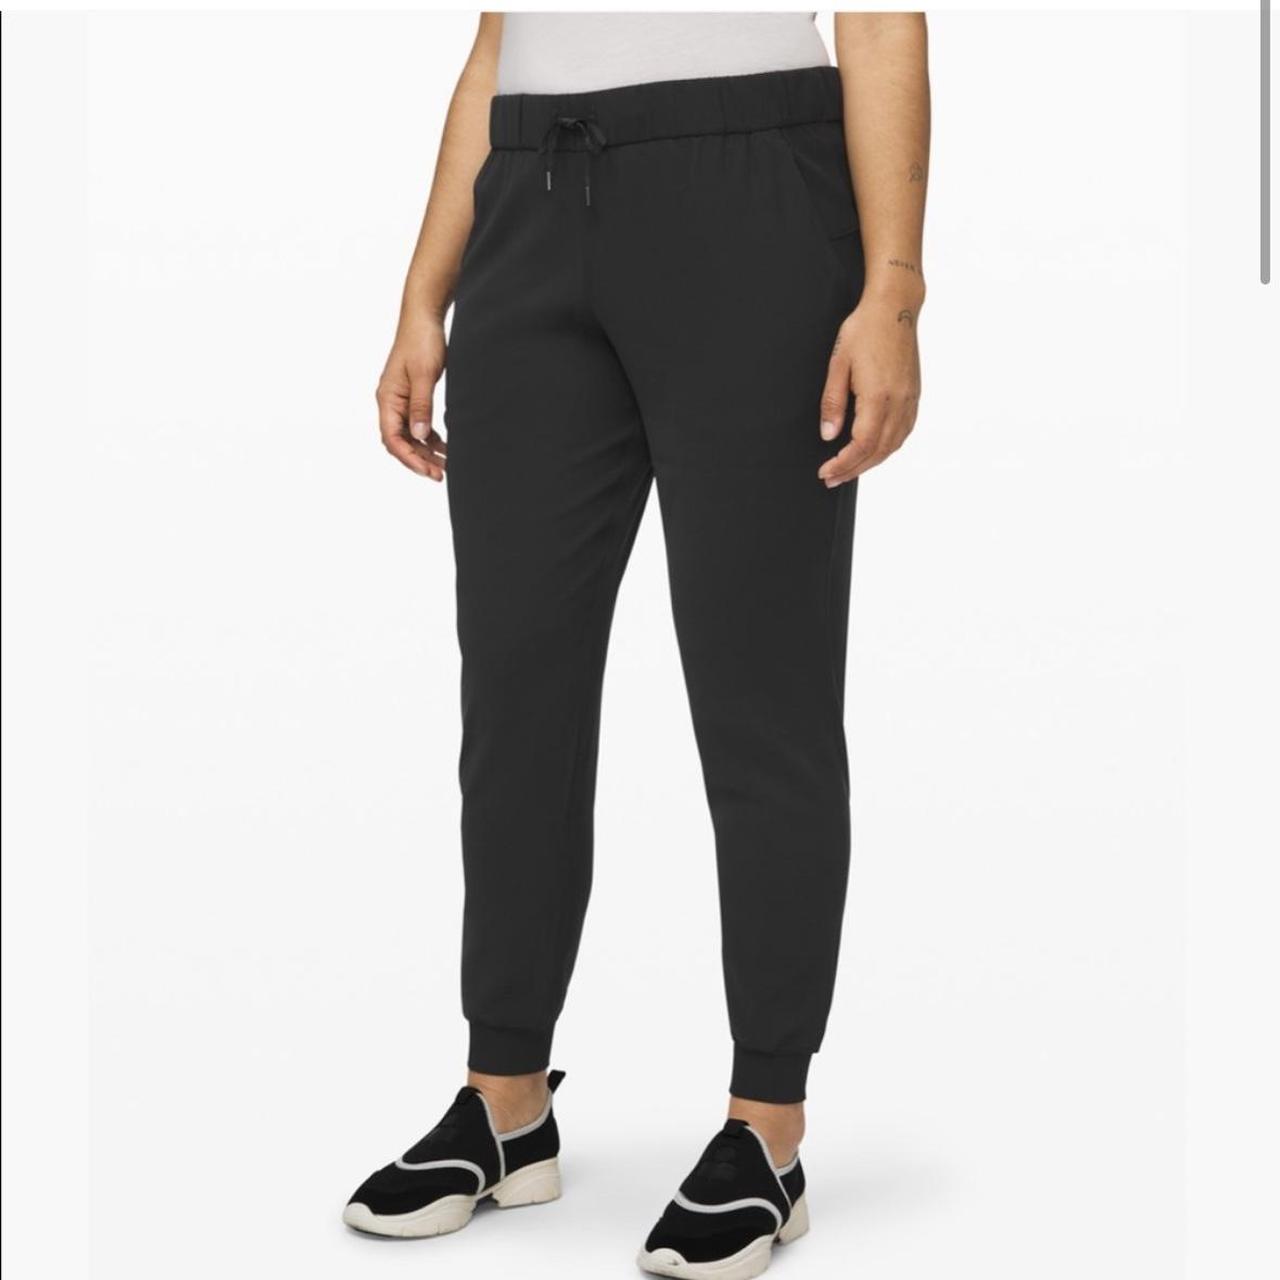 Women's Lululemon Black Pants Drawstring Size 4 Pockets